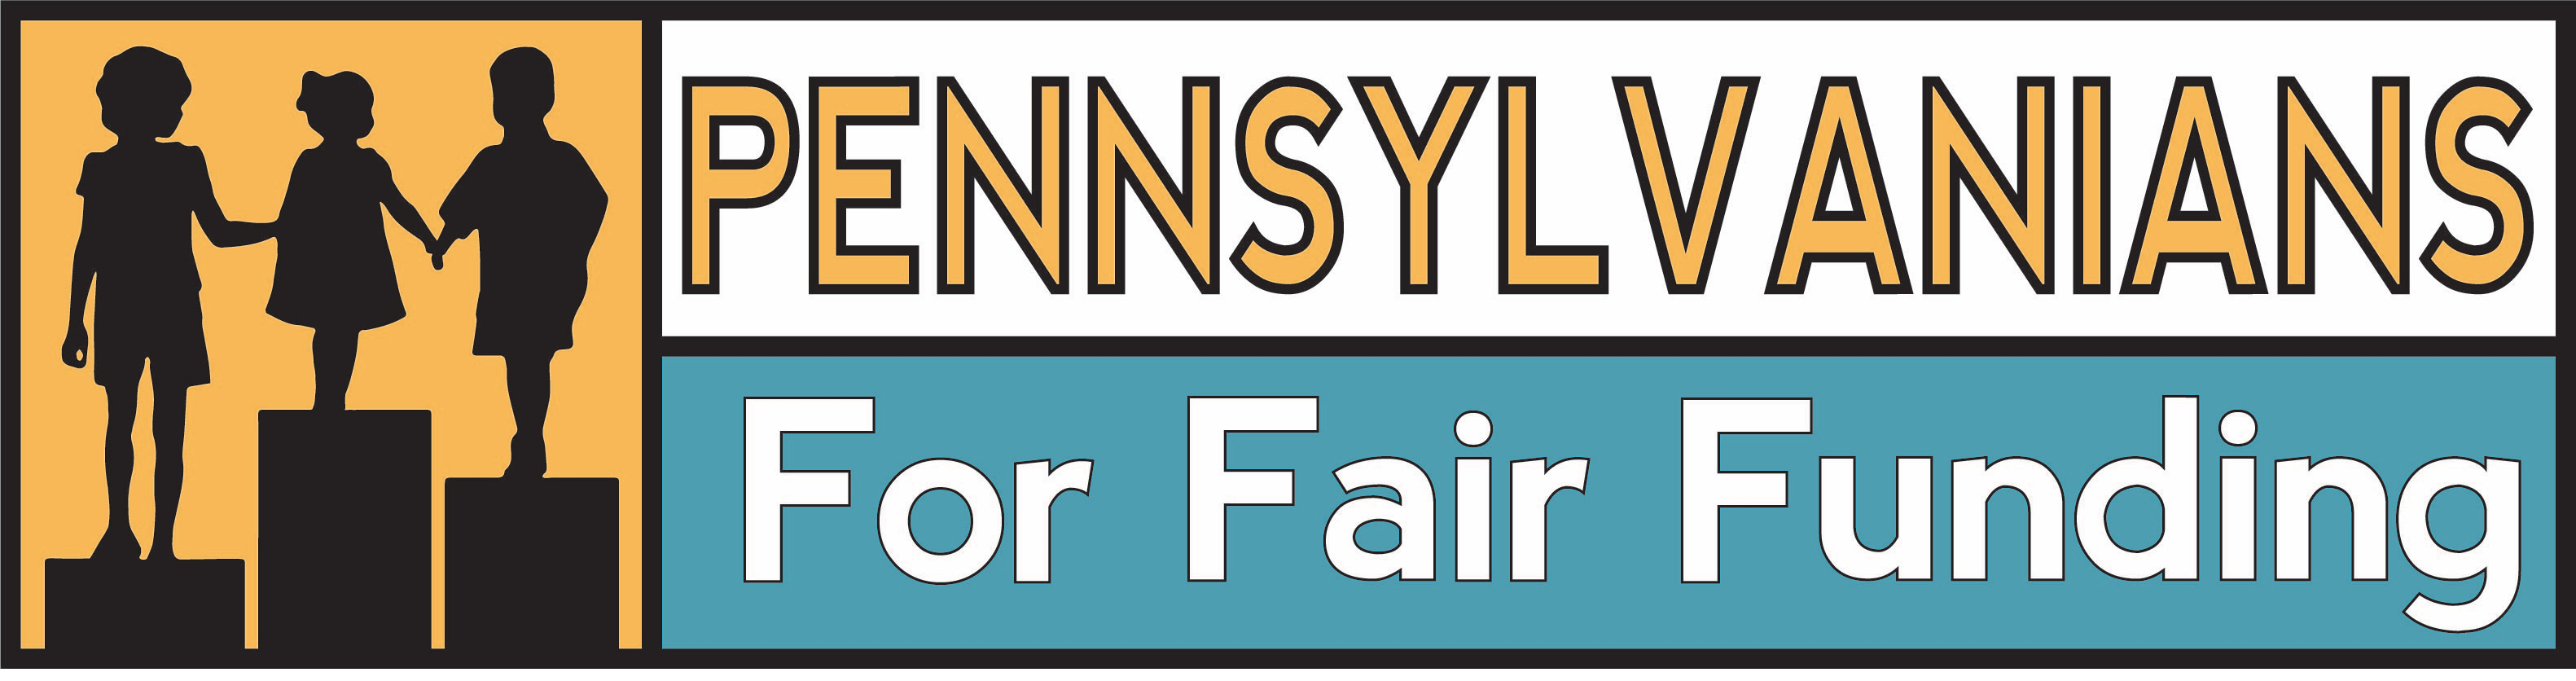 Pennsylvanians for Fair Funding